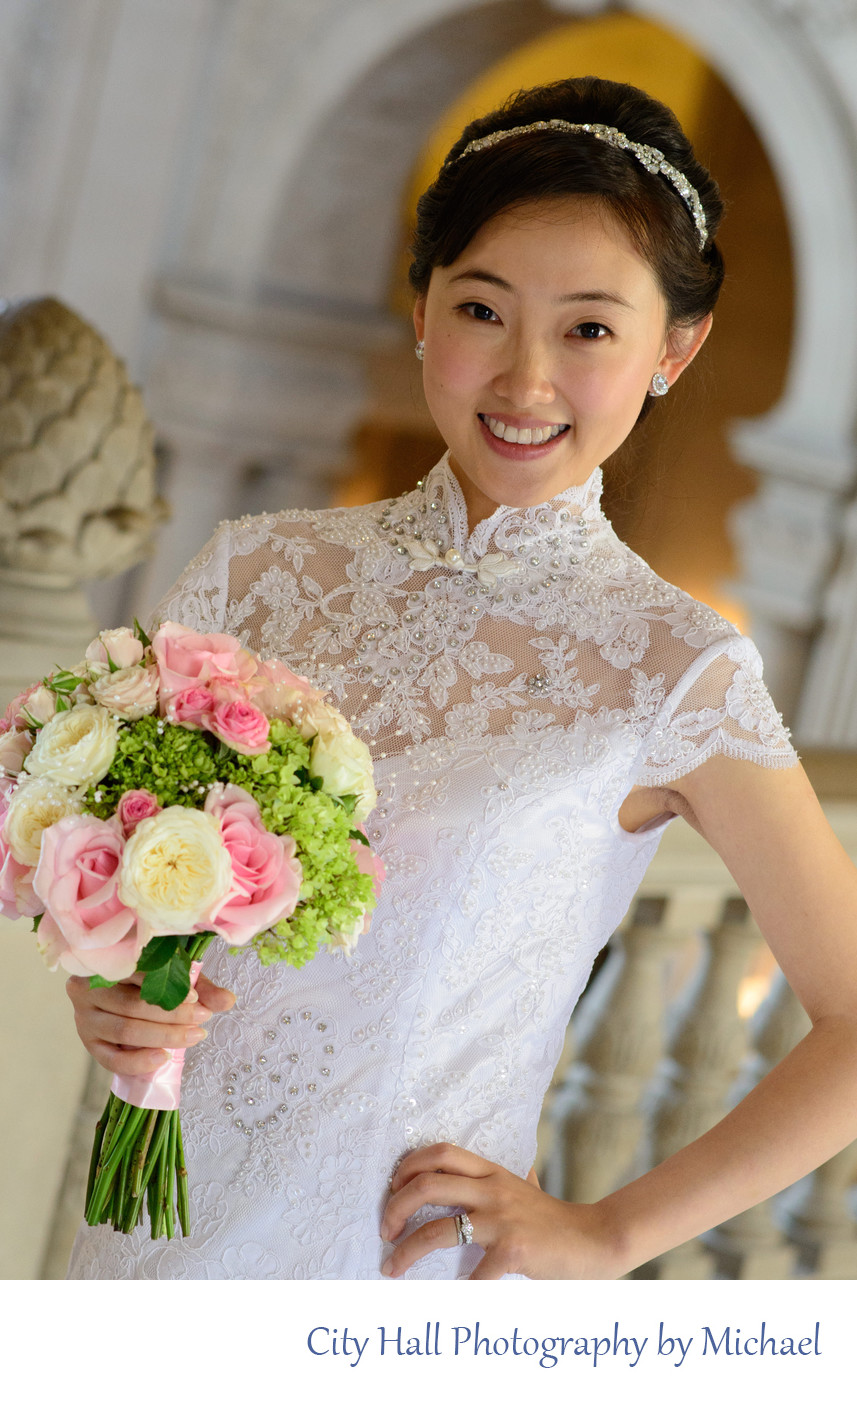 Wedding Photographer San Francisco City Hall - Asian Bride  posing while holding a Bouquet